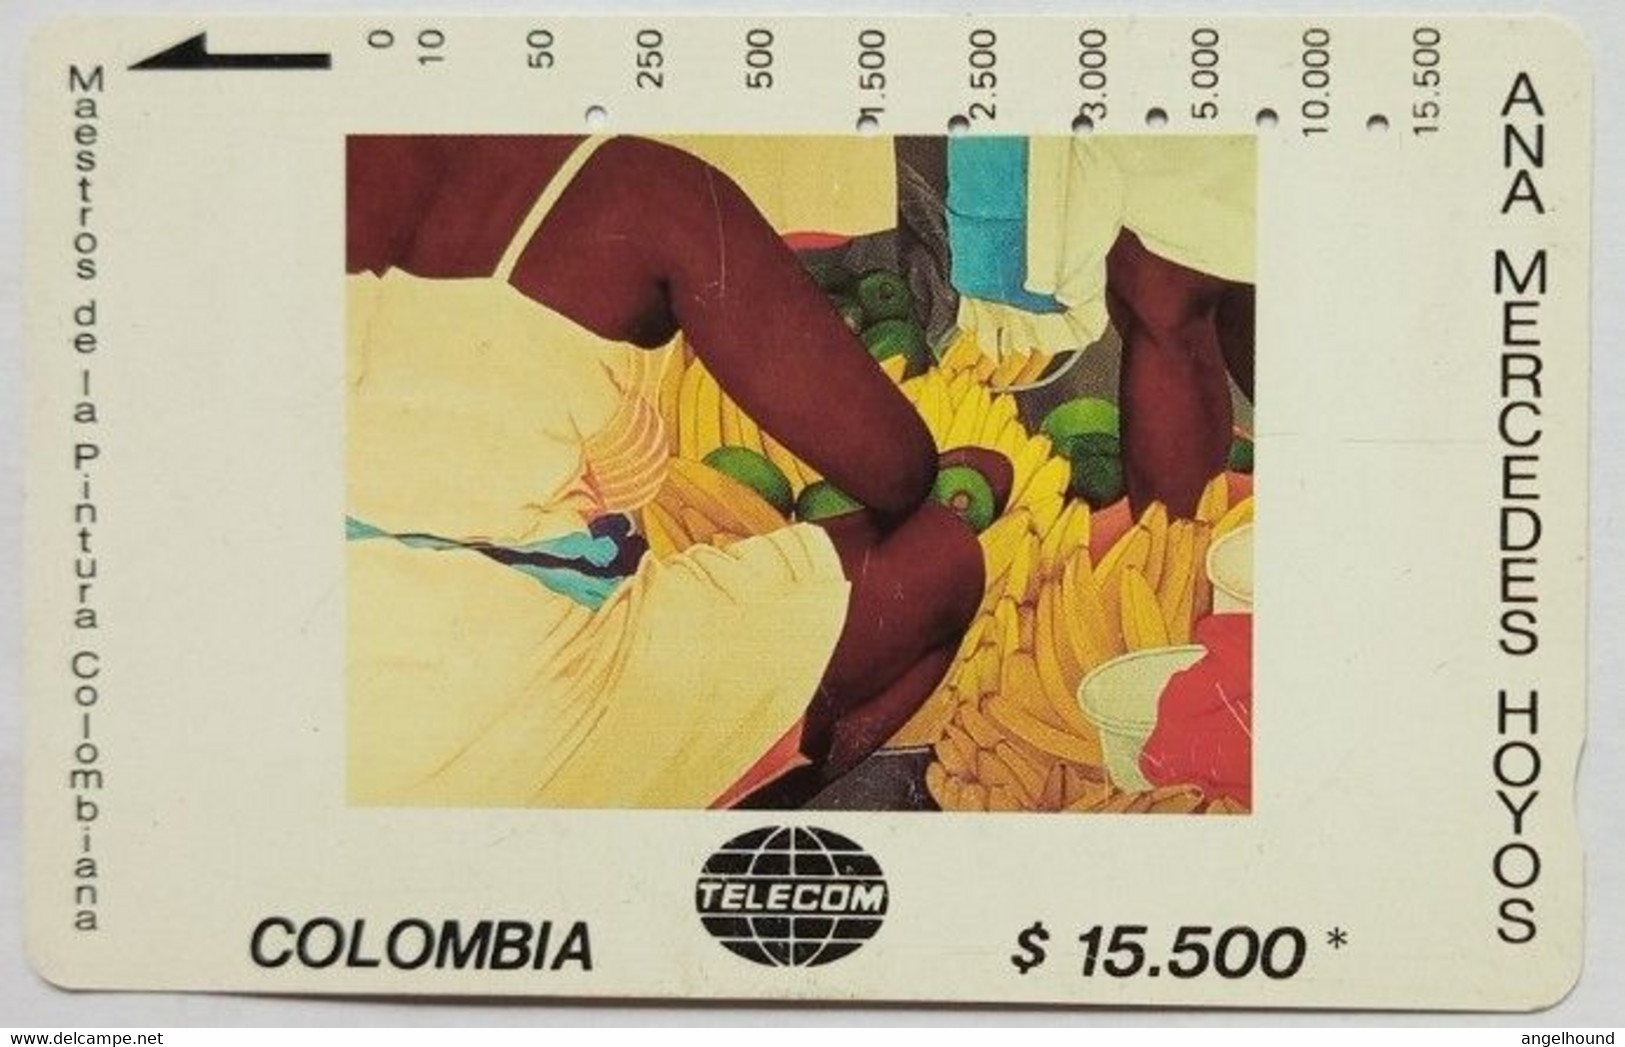 Colombia $15,500 Ana Mercedes Hoyos "Bazurto" - Colombie